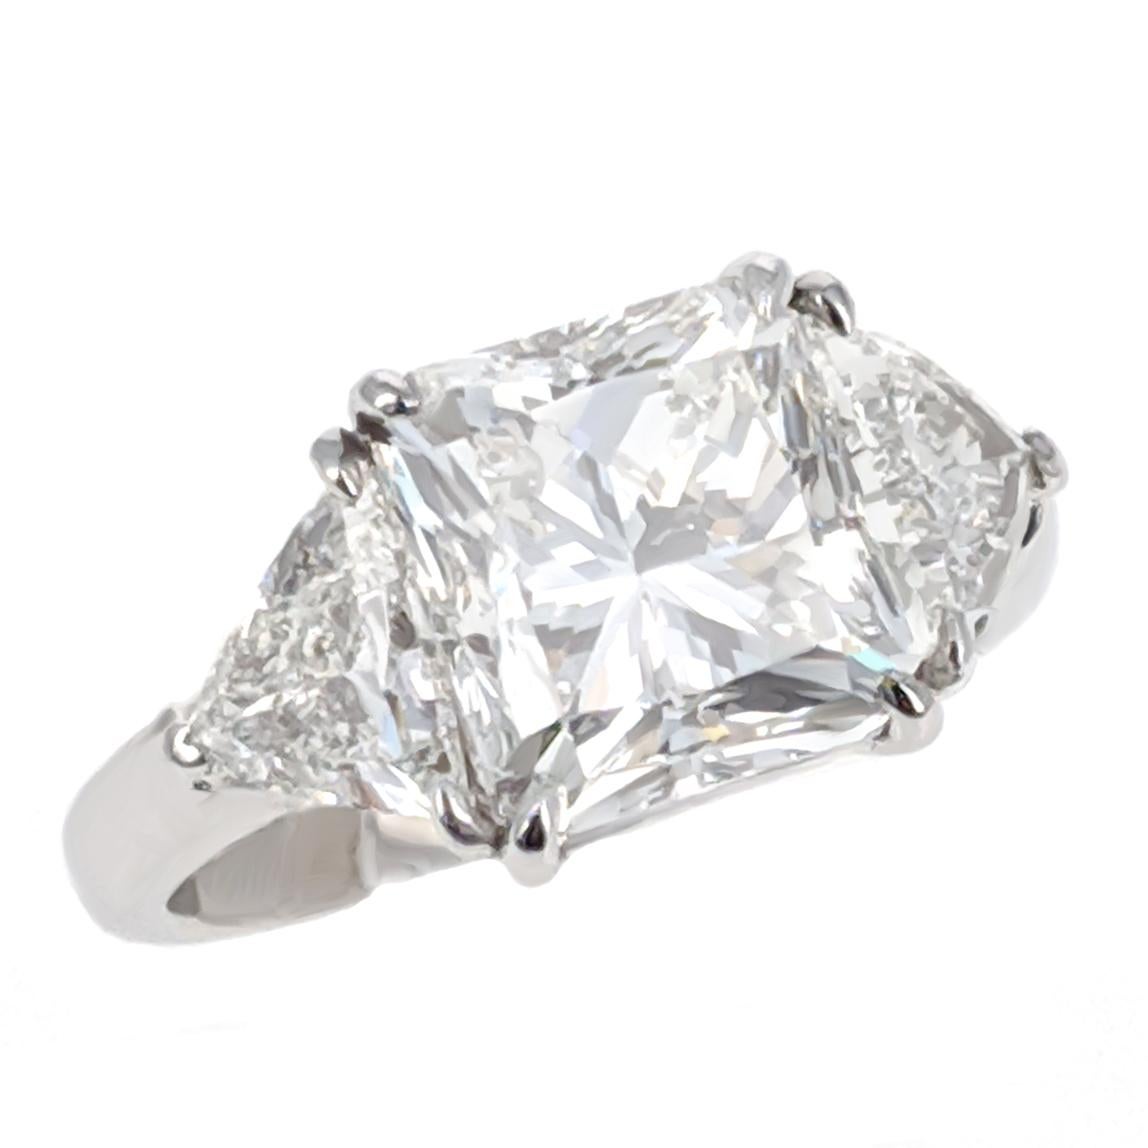 Contemporary 4.03 Carat Radiant Cut Diamond Ring GIA I SI1